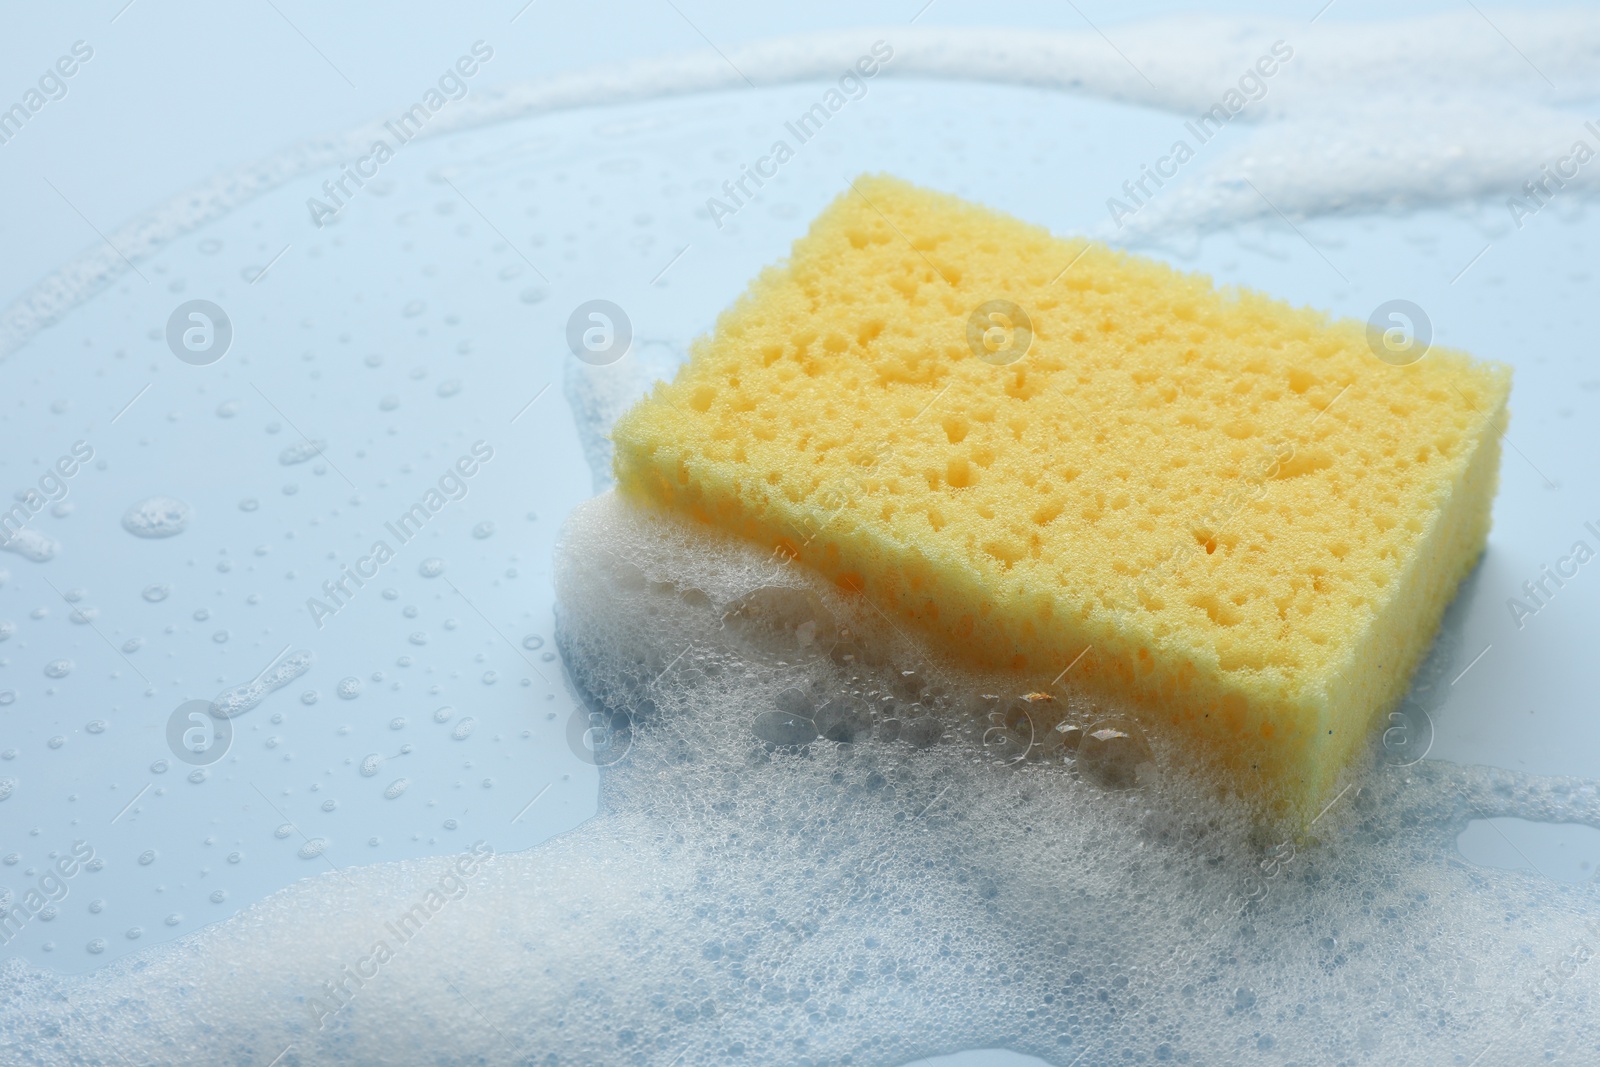 Photo of Yellow sponge with foam on light blue background, closeup